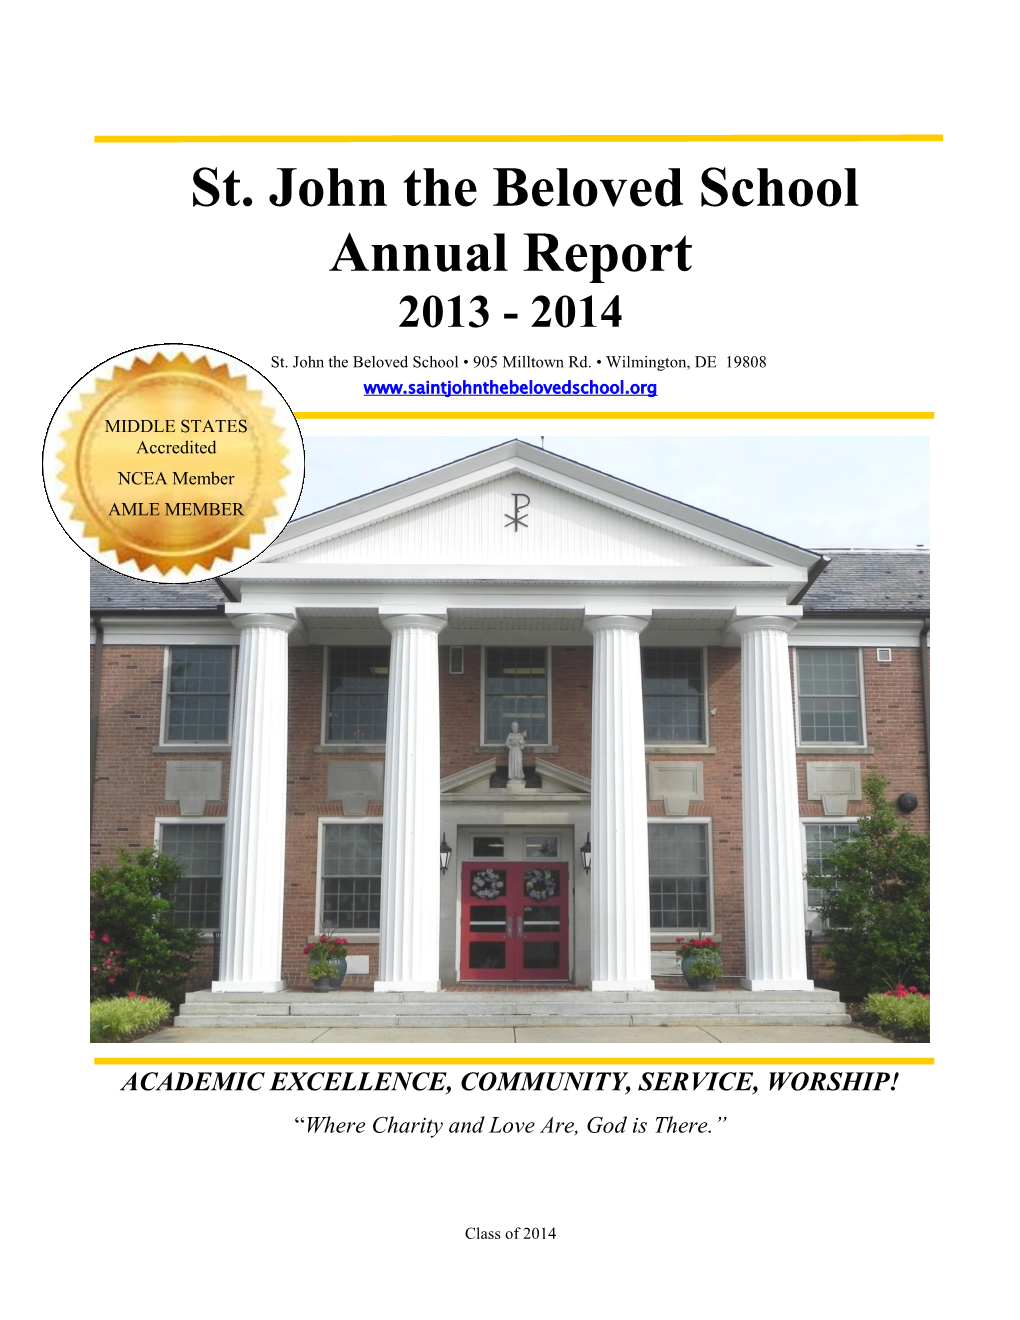 St. John the Beloved School Annual Report 2013 - 2014